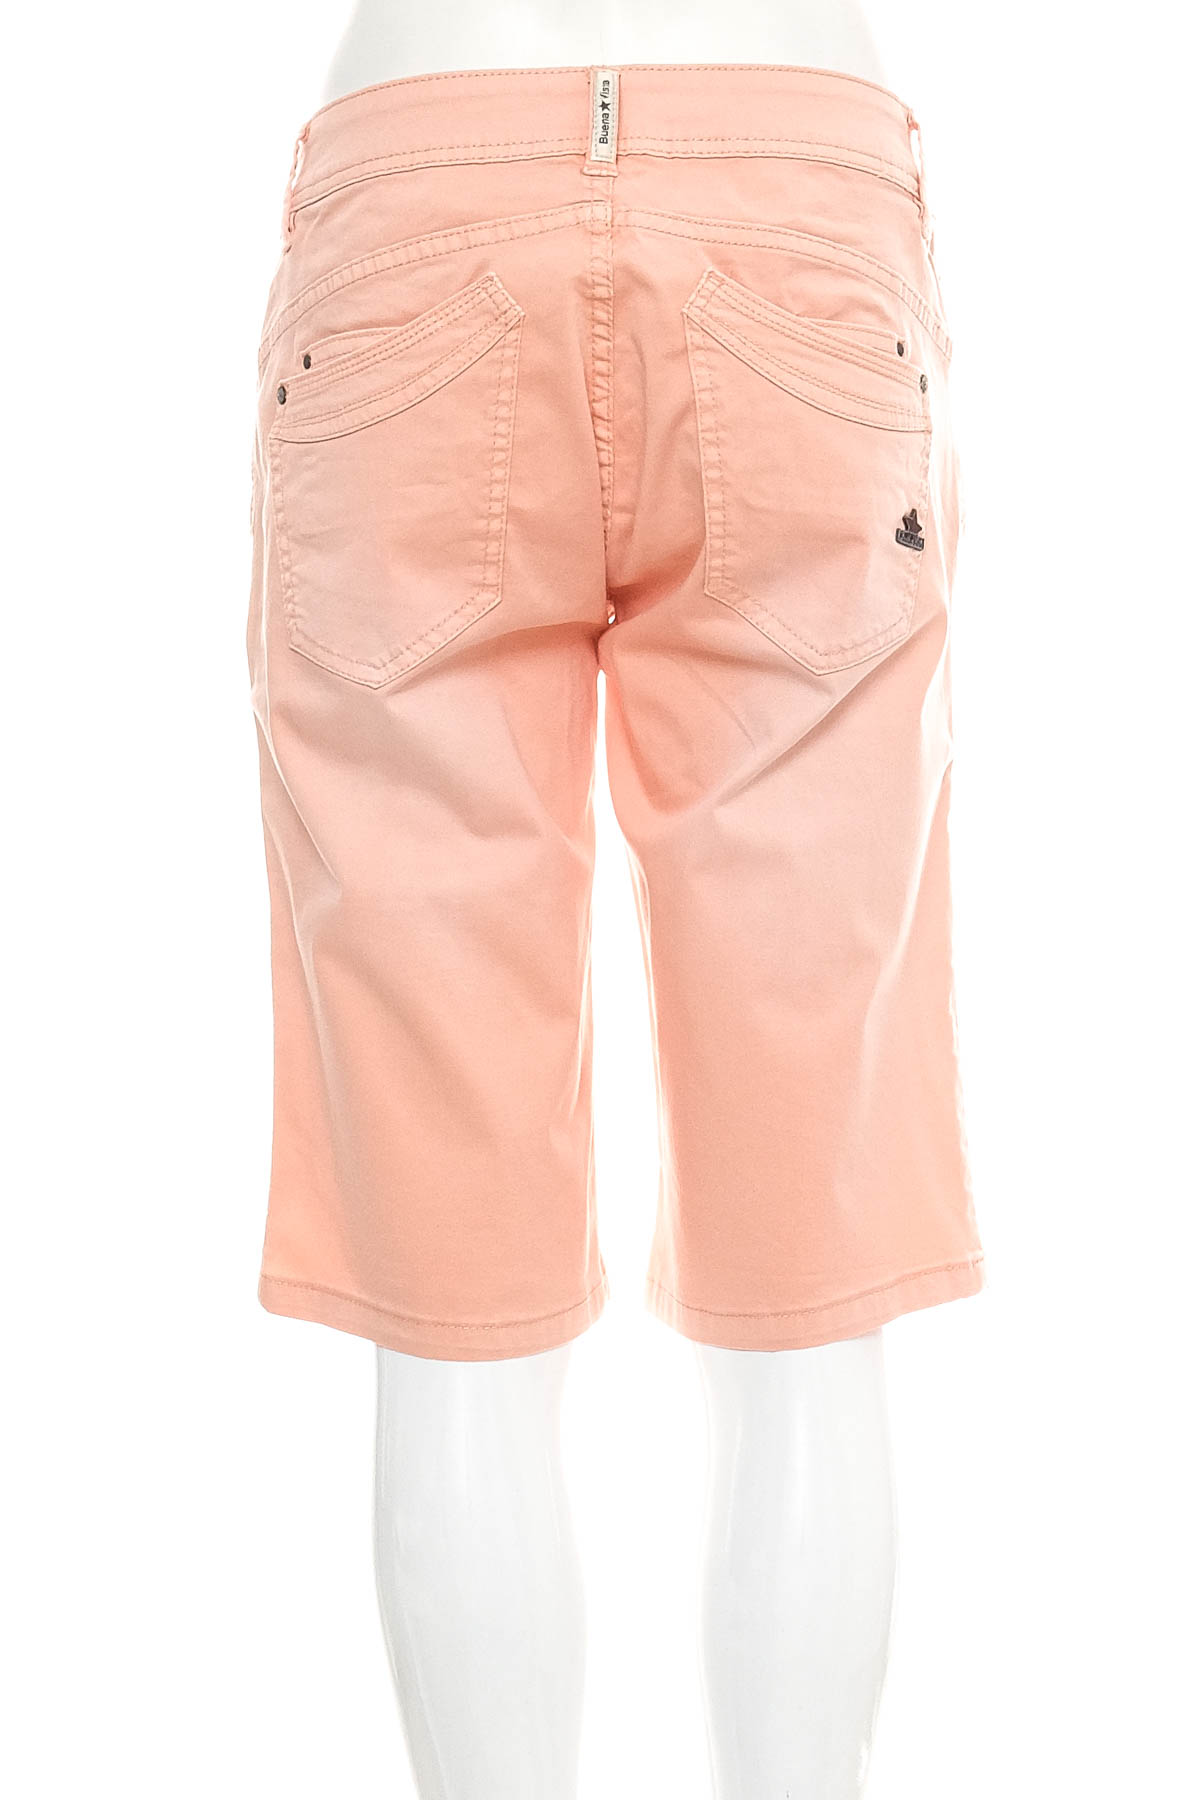 Female shorts - Buena Vista - 1